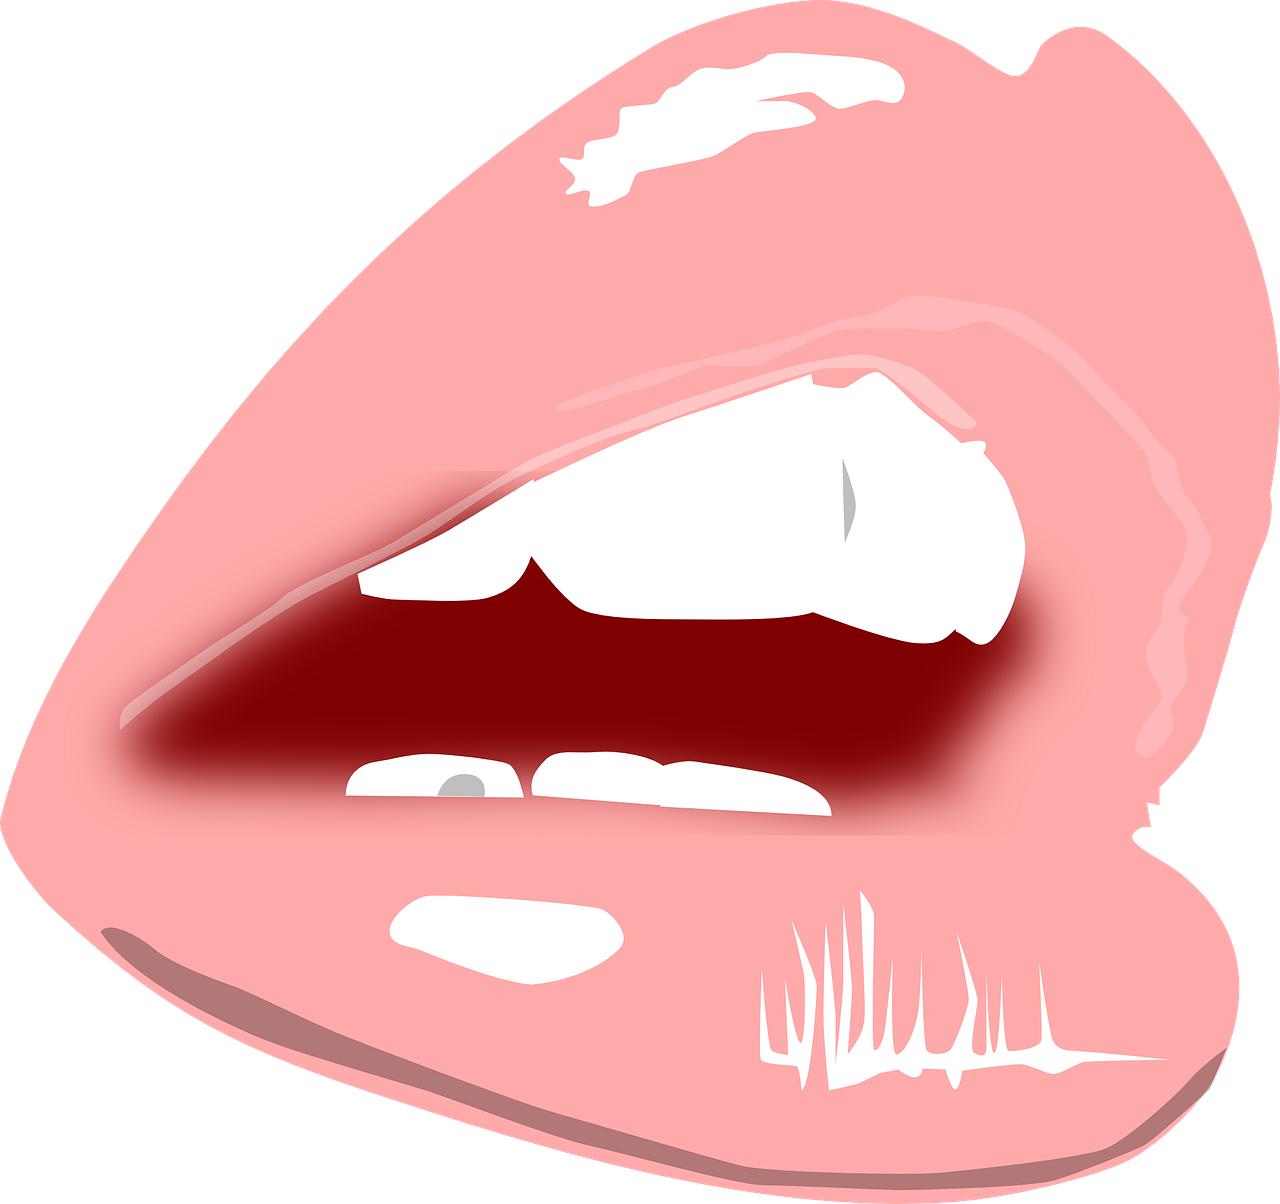 Lip Drawings PNG HD Quality